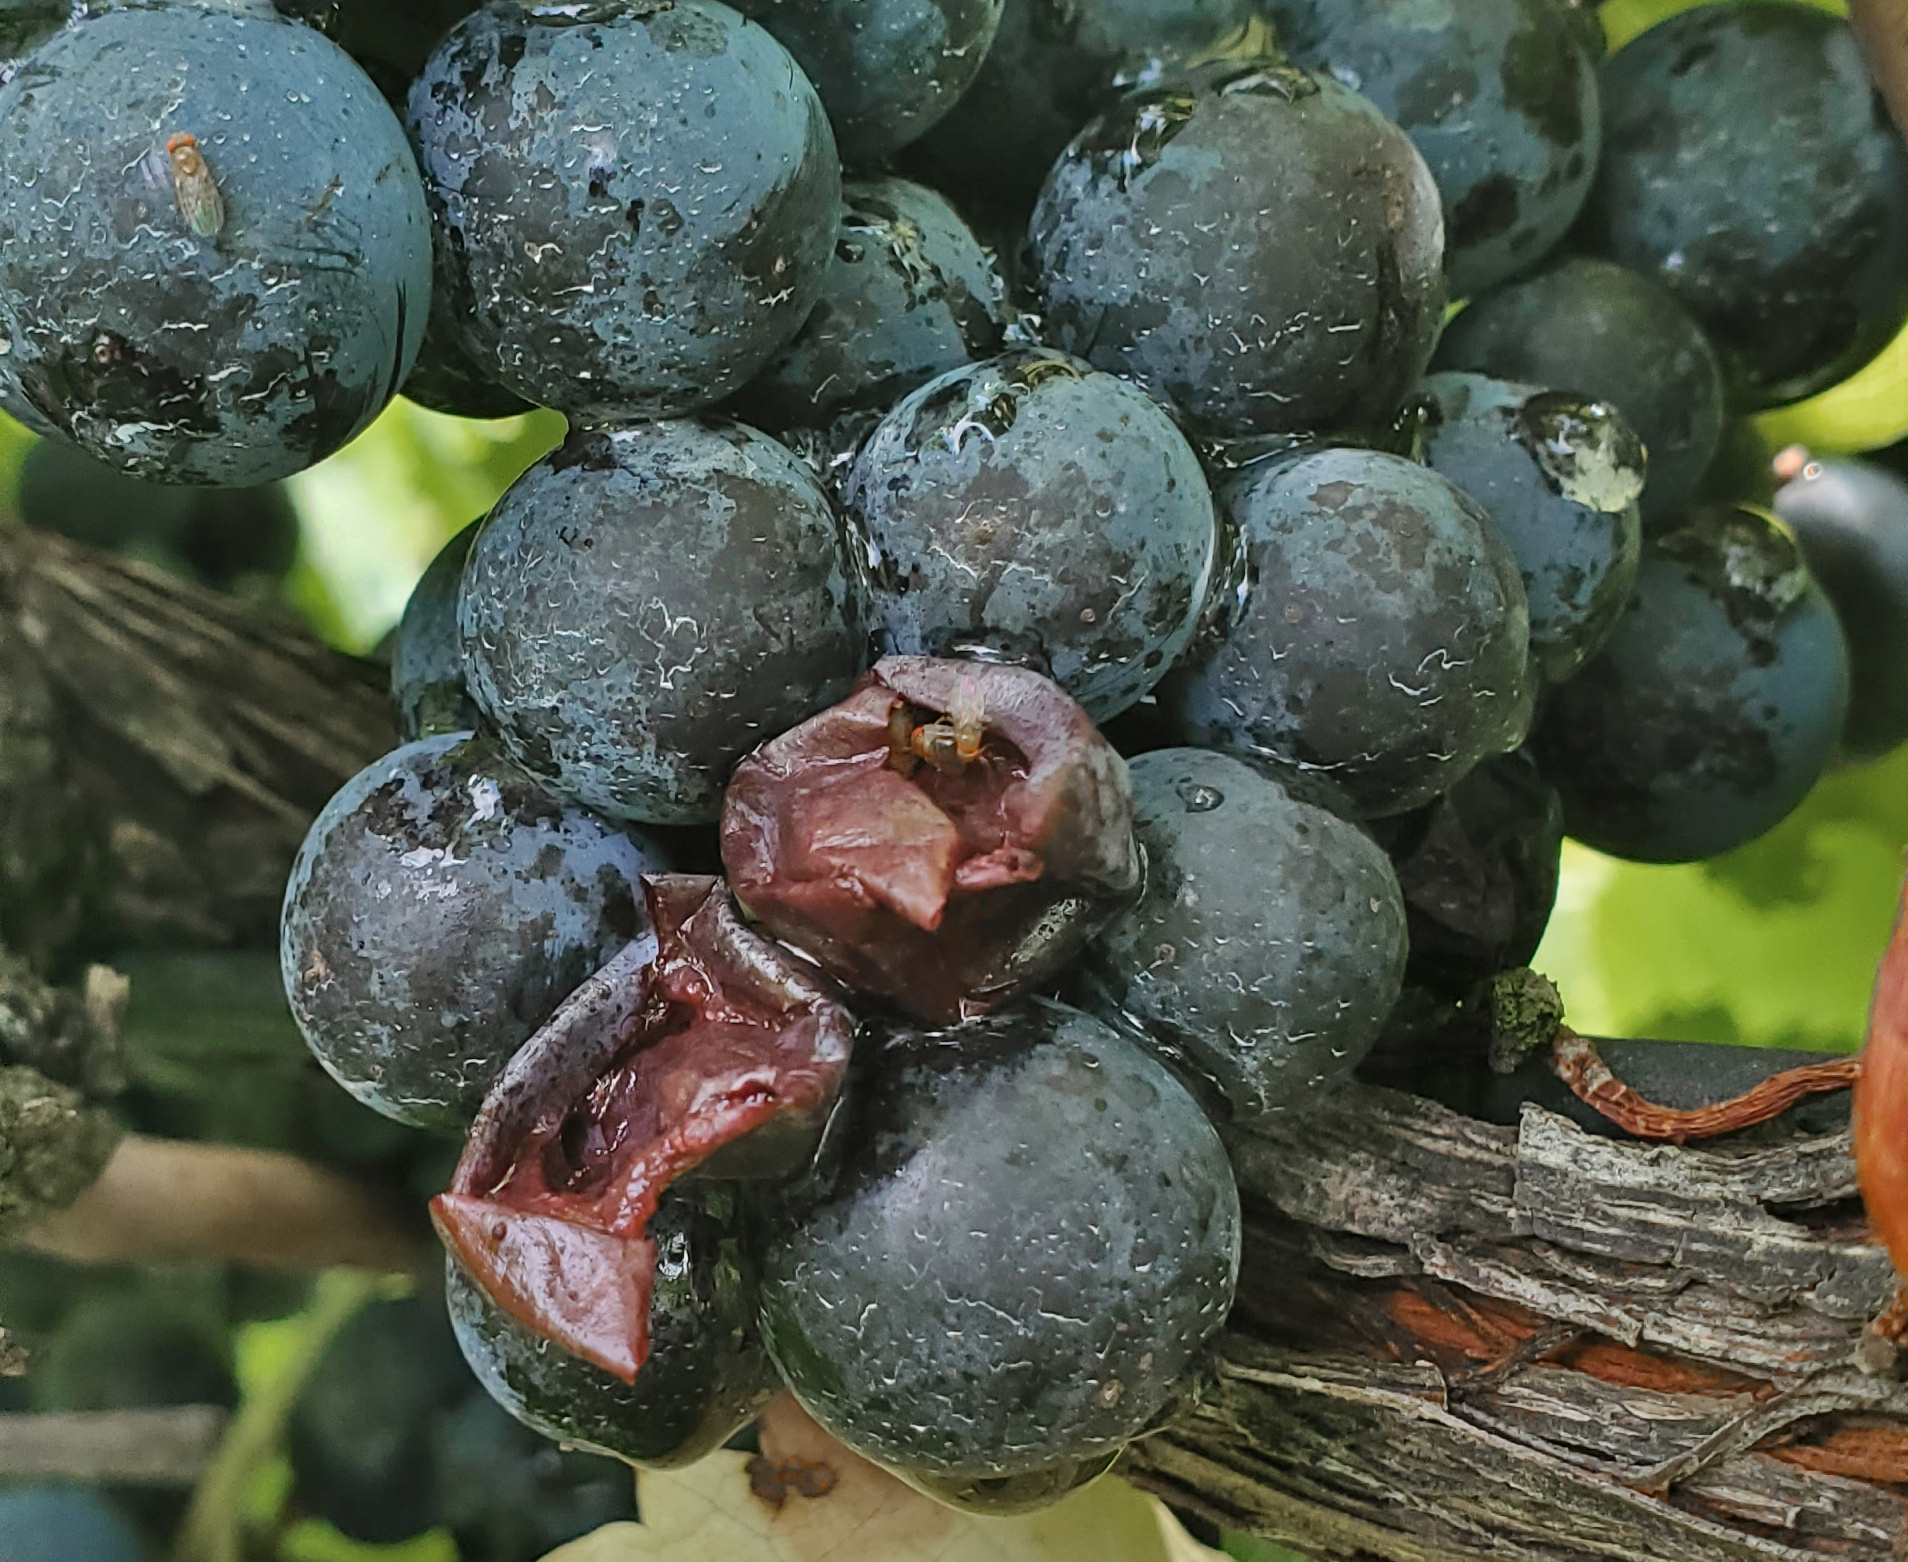 Vinegar fly damage to grape